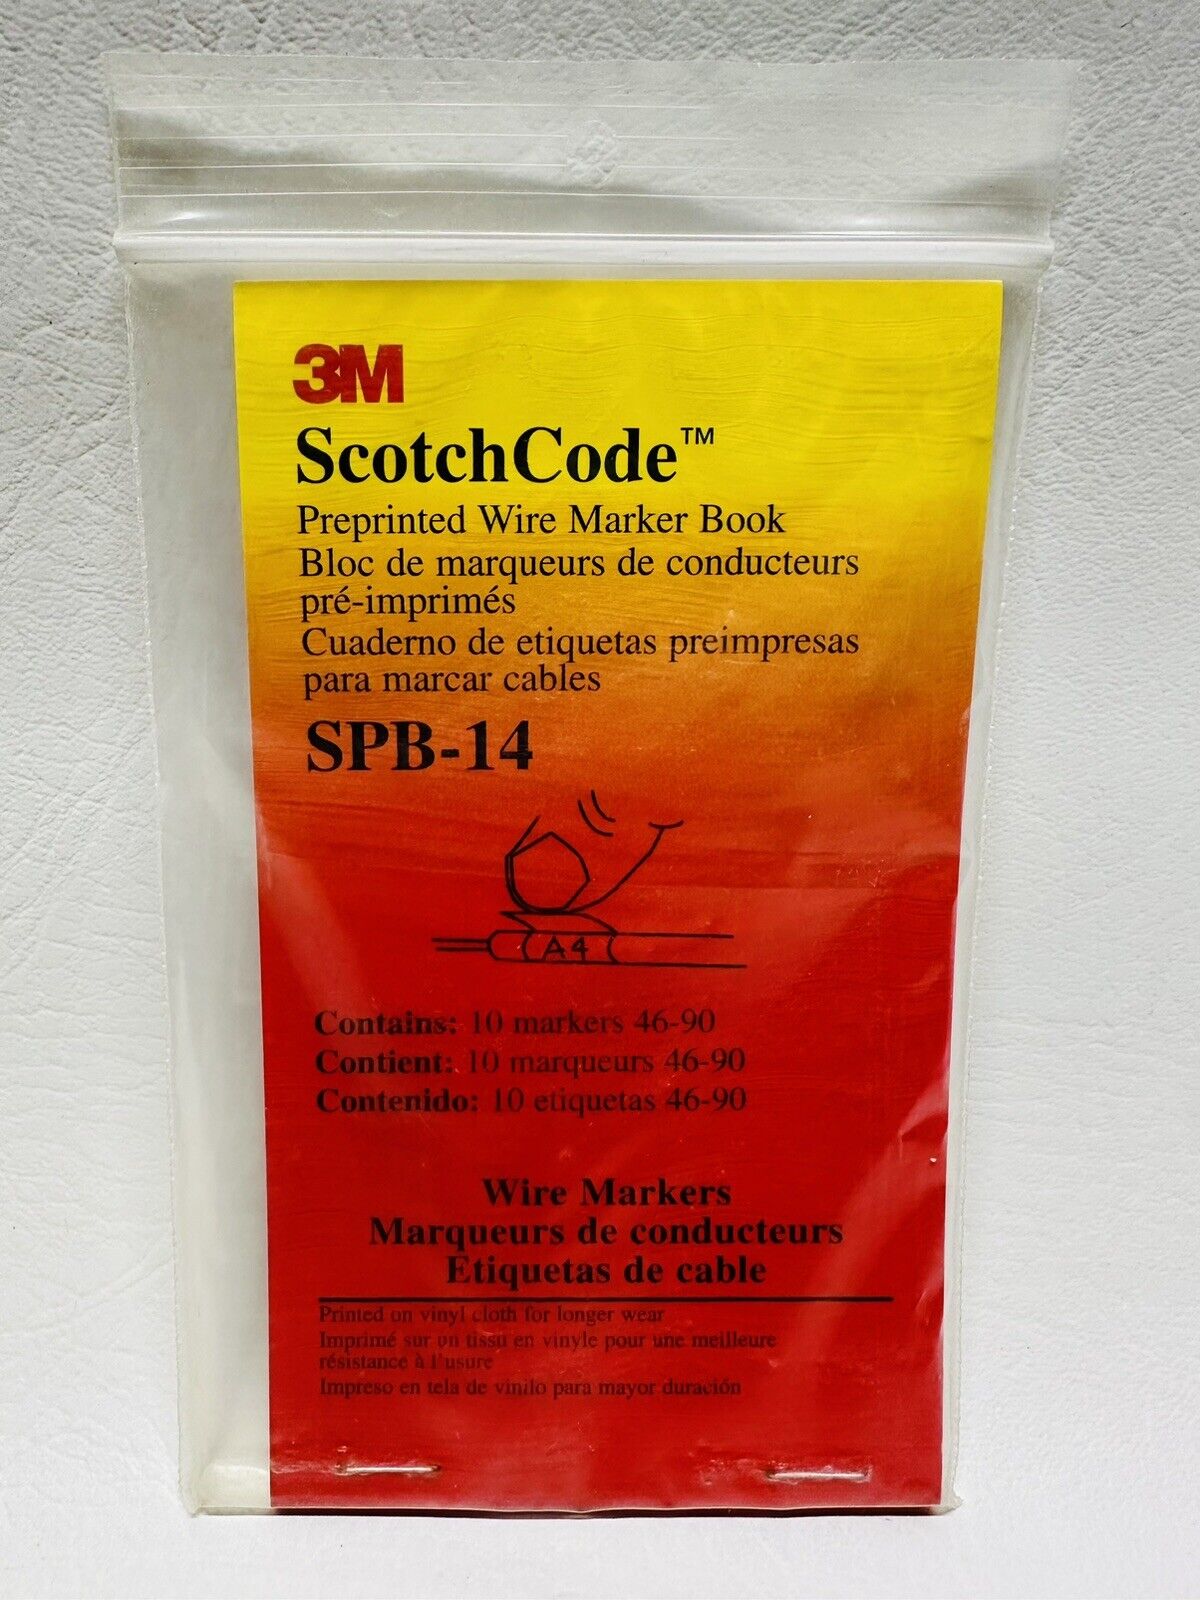 NEW 3M ScotchCode SPB-14 Preprinted Wire Marker Book